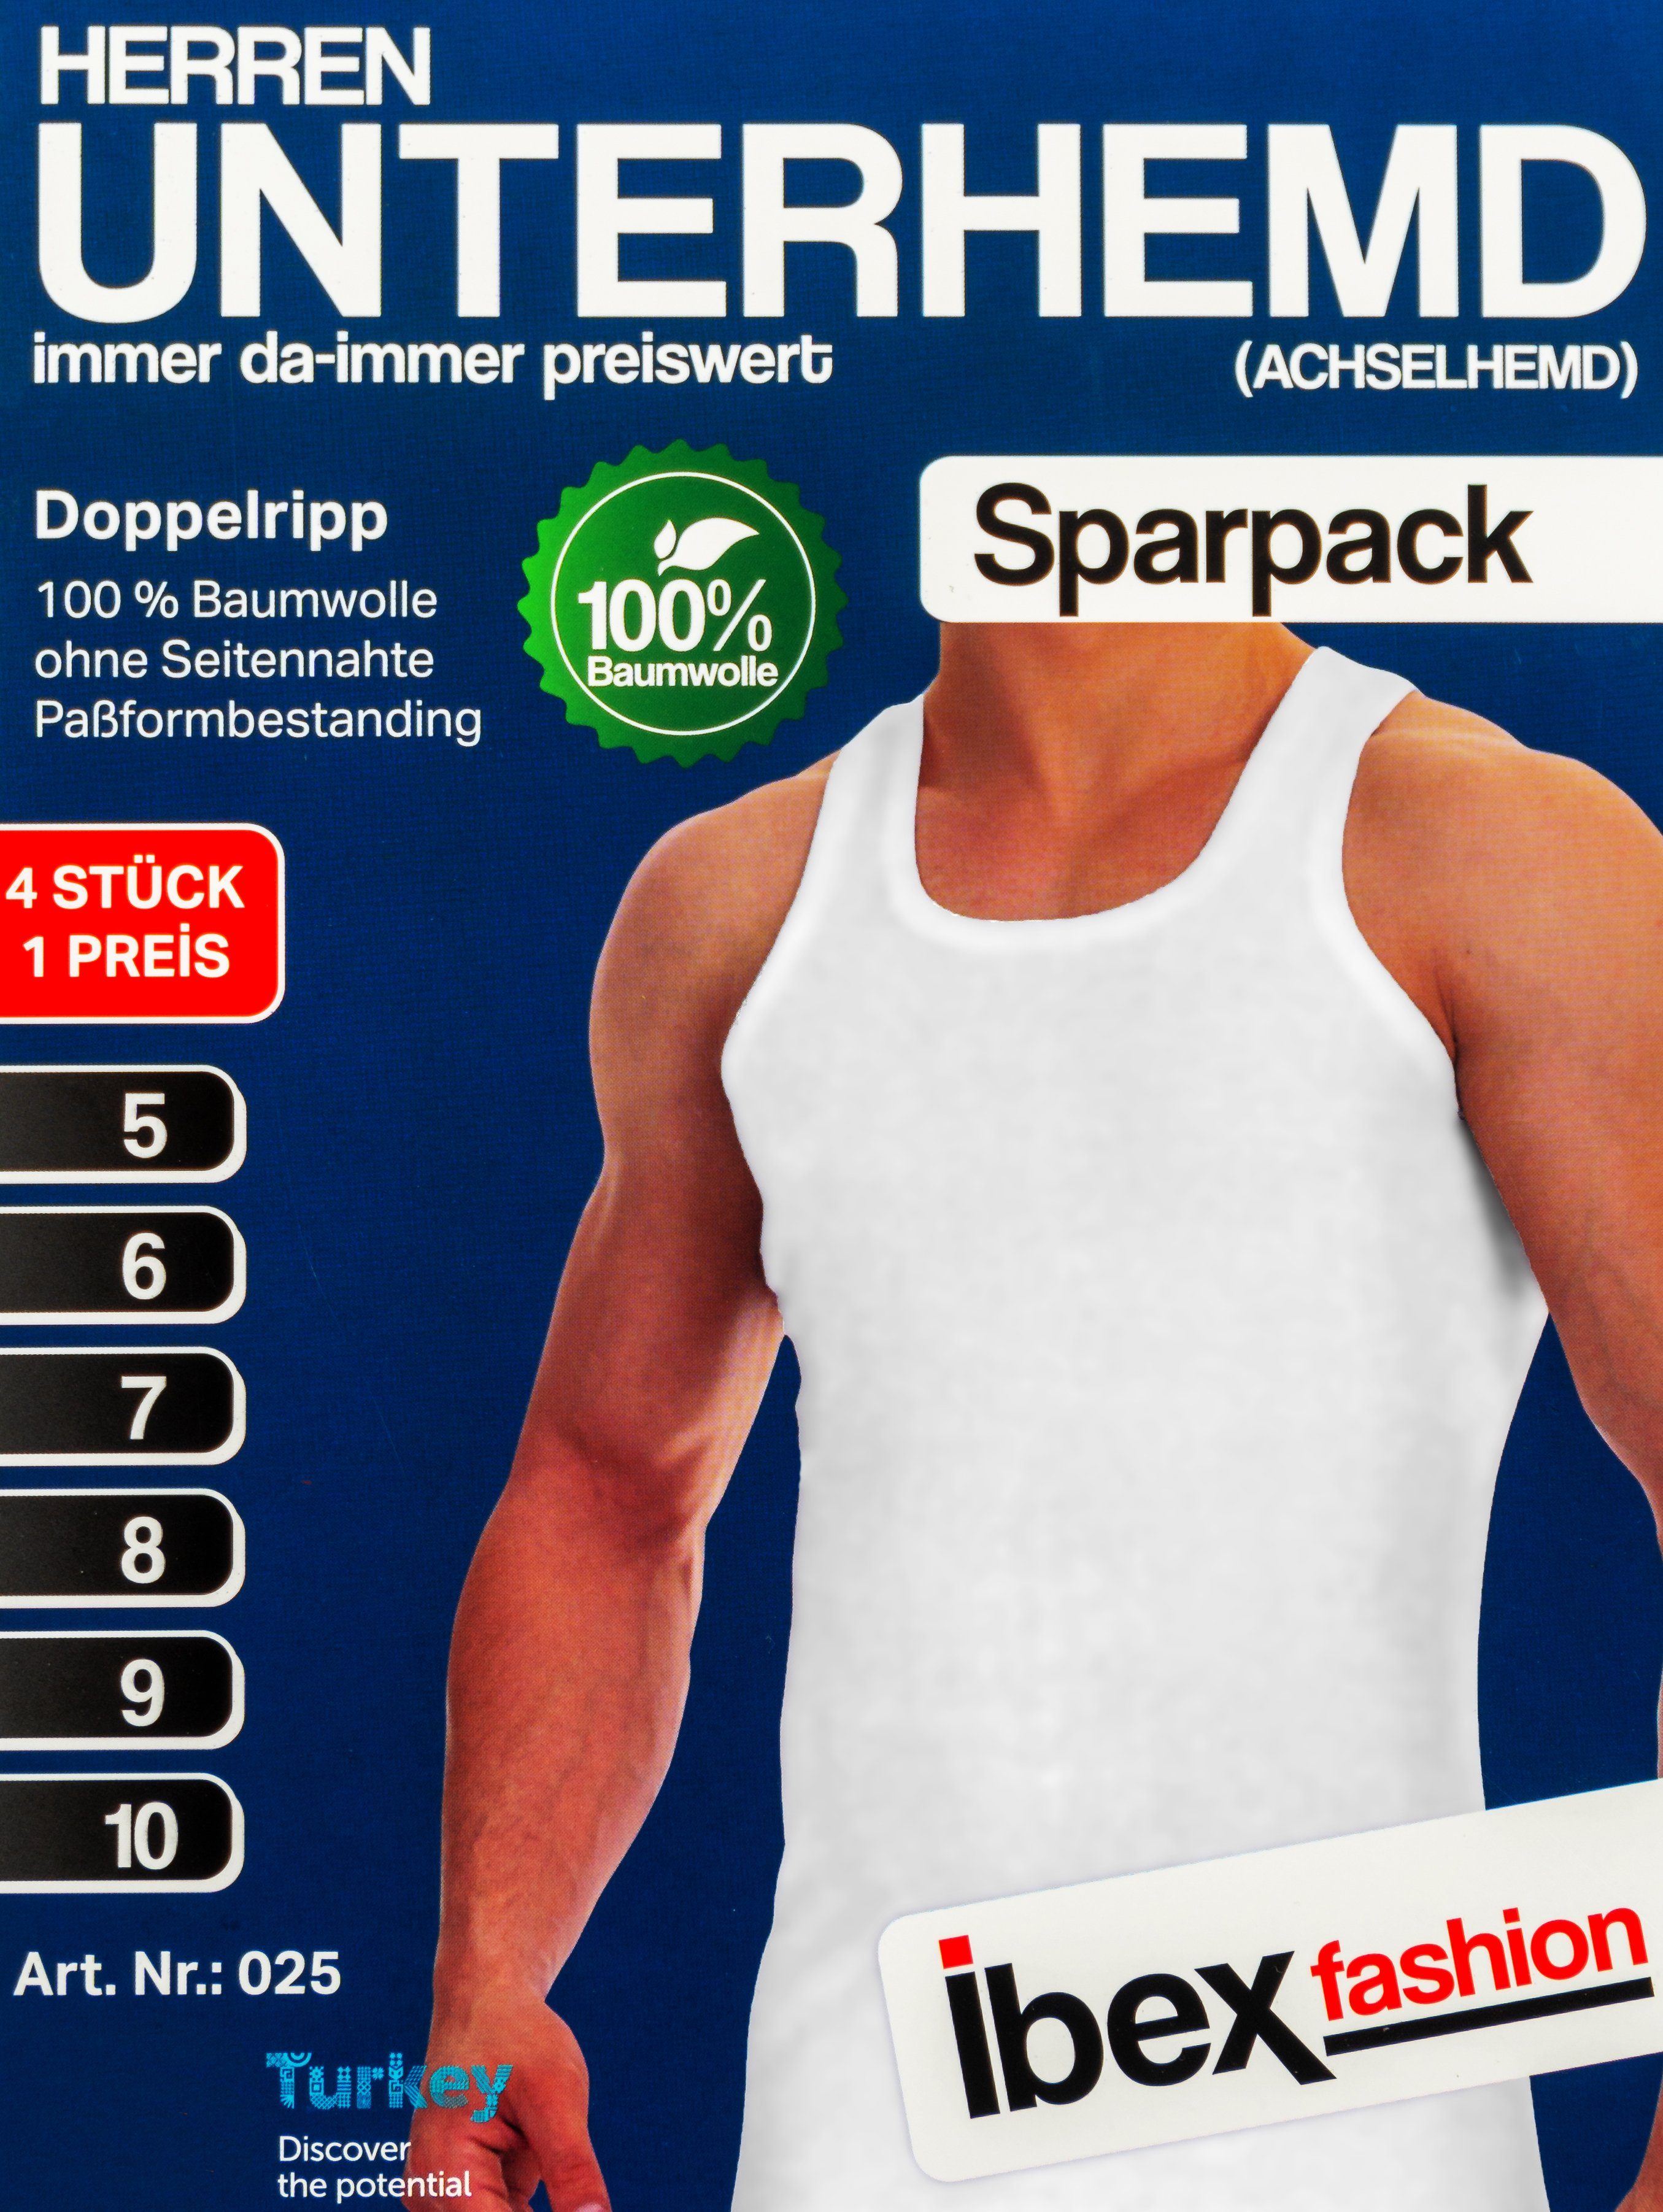 TEXEMP Achselhemd 4er Pack Herren Unterhemd Tank-Top Achselhemd Doppelripp Baumwolle (Packung, 4er-Pack) 100% Baumwolle